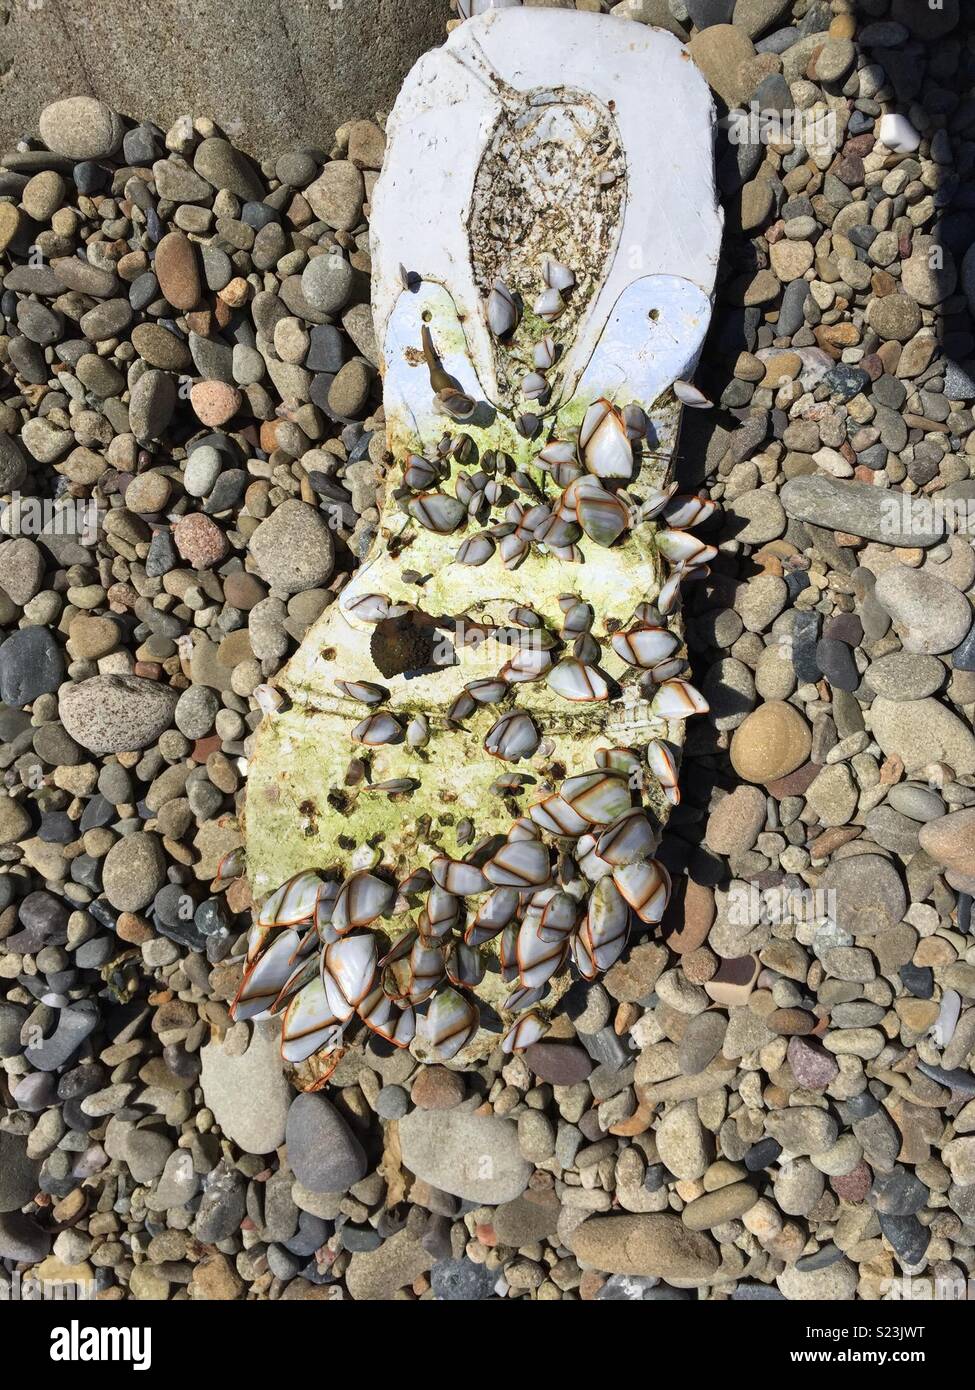 Shells on shoe washed up on beach, Fair Isle, Scotland Stock Photo